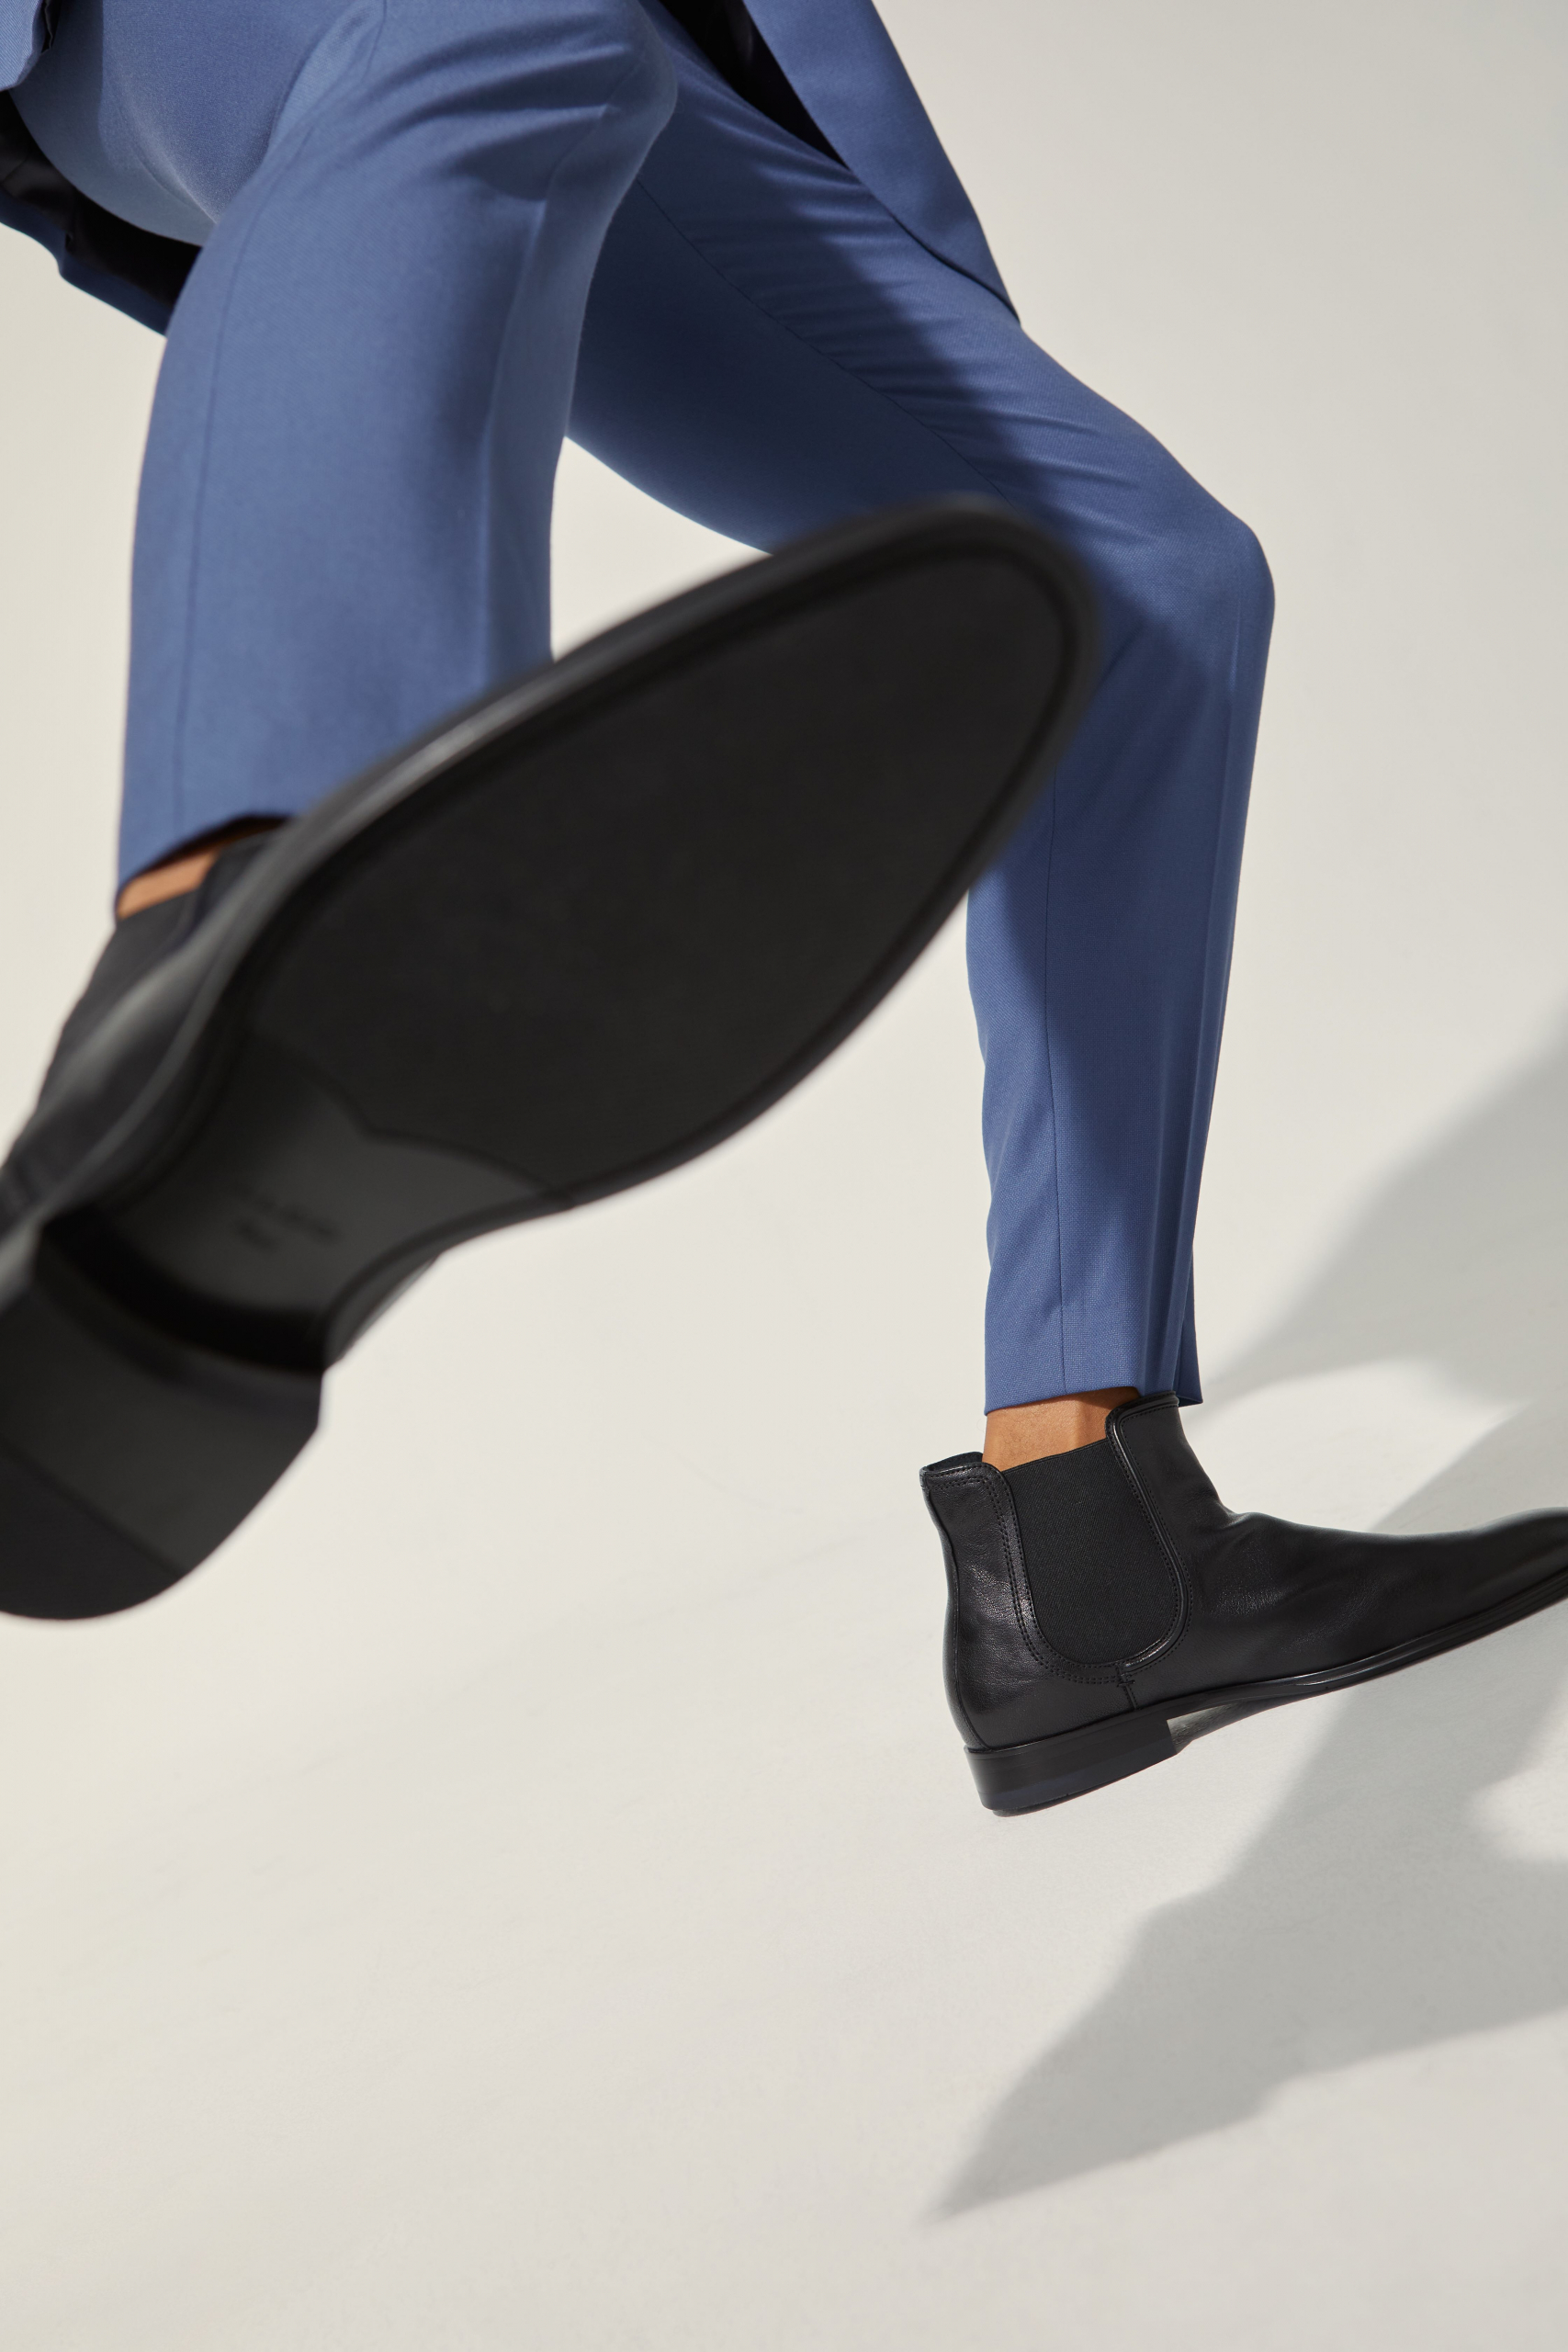 aldo shoes scarpe comfort tecnologia flex